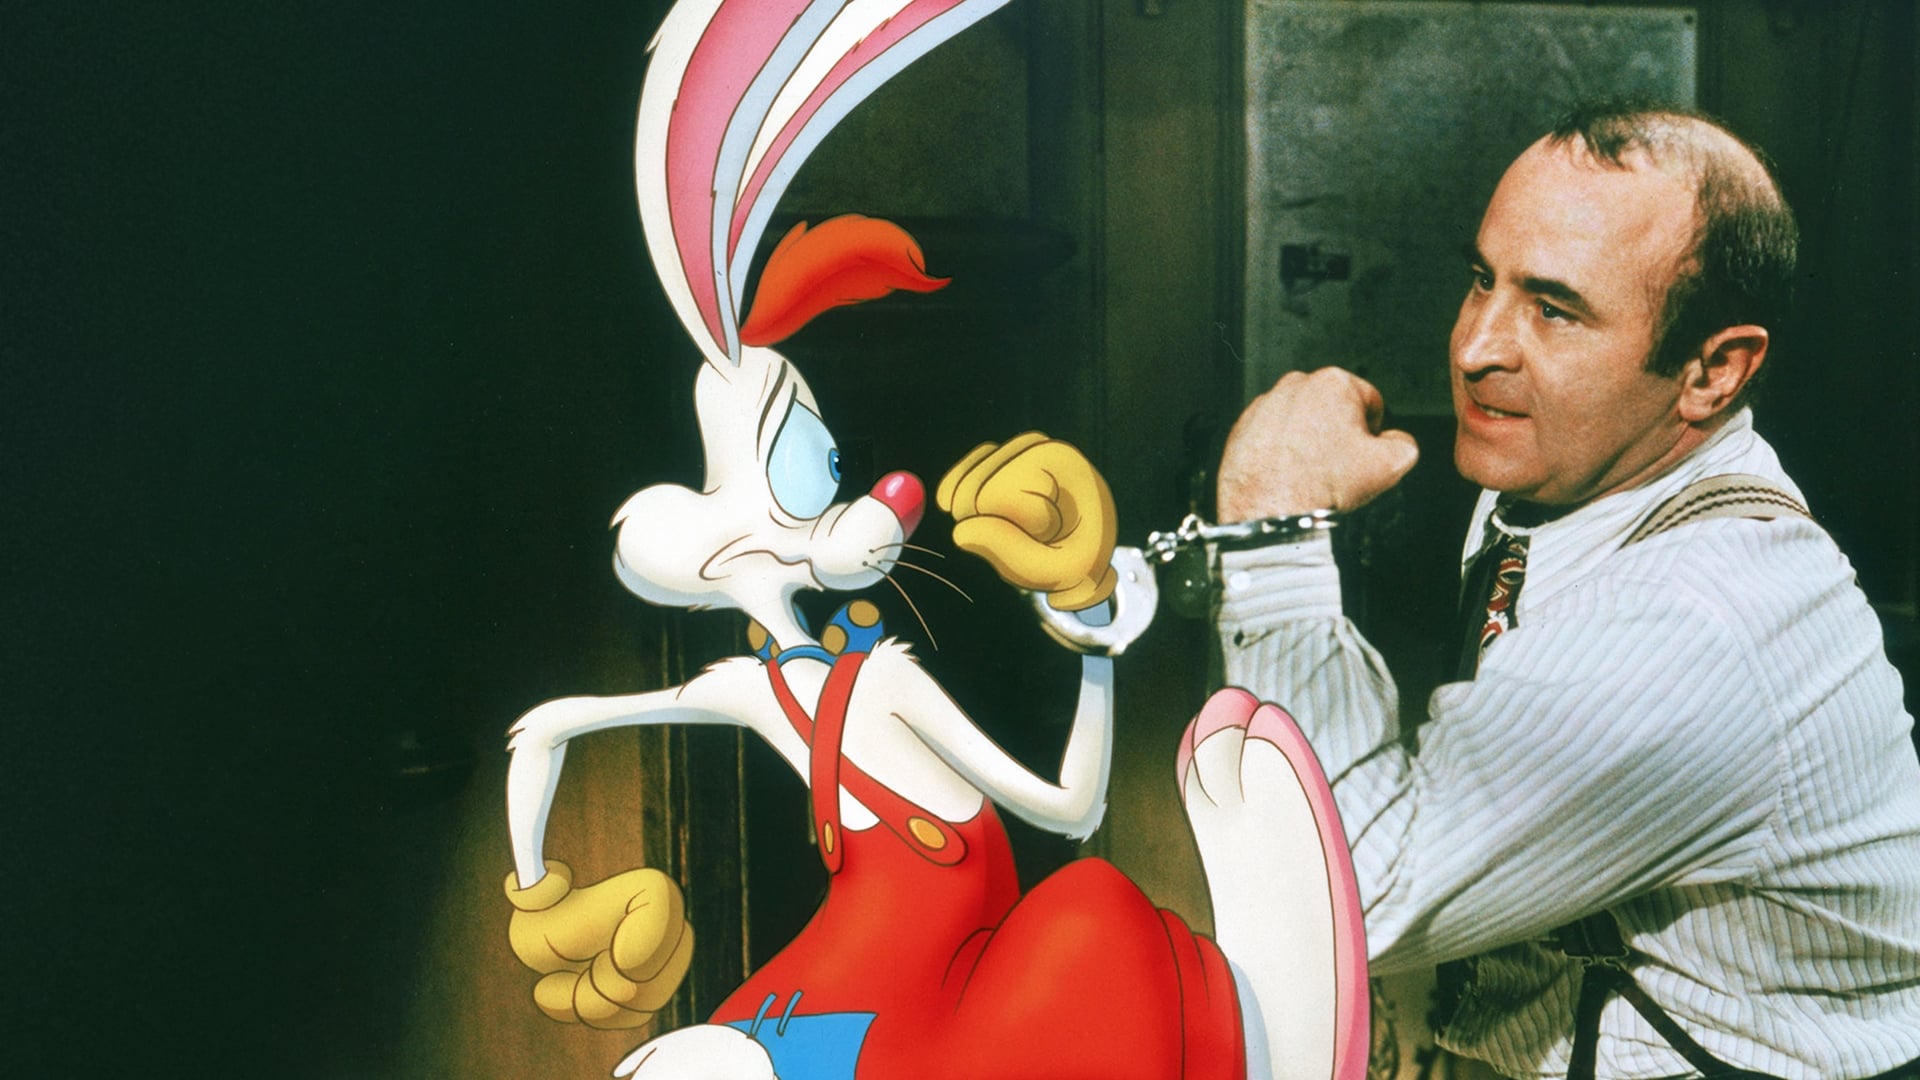 Image du film Qui veut la peau de Roger Rabbit ? 8f981im7bgvv5v9hh6z8y4hcnkfjpg